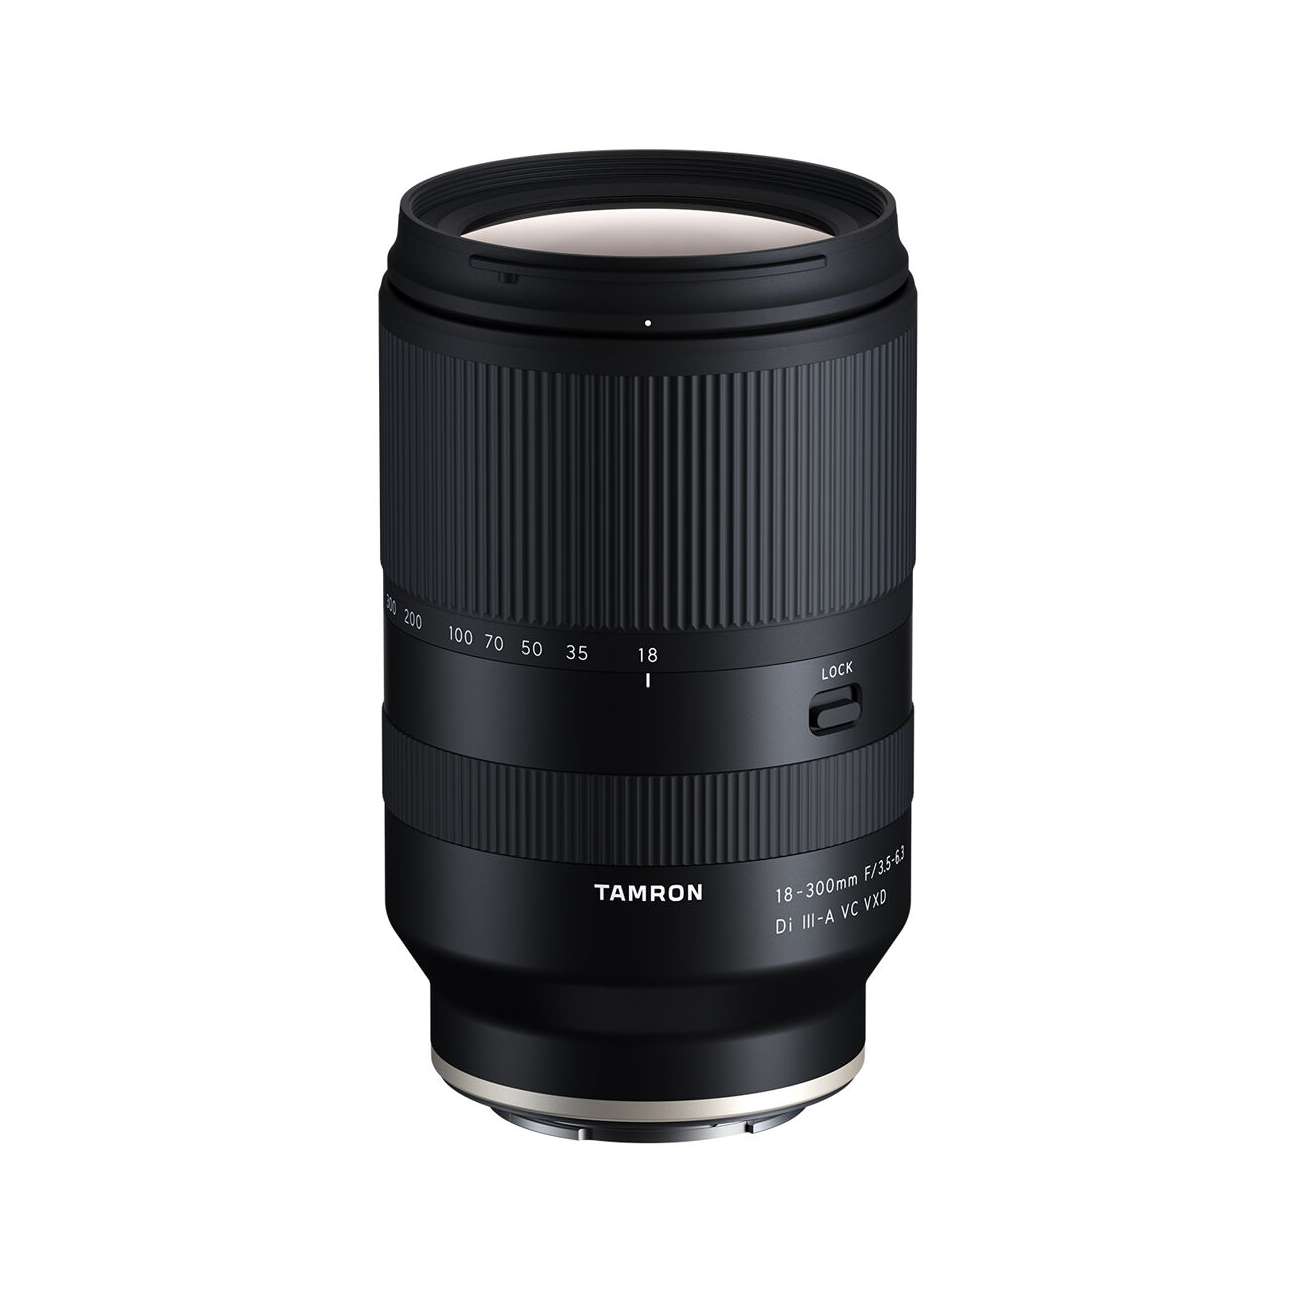 Tamron 18-300mm F/3.5-6.3 Di III-A VC VXD Lens for Sony E